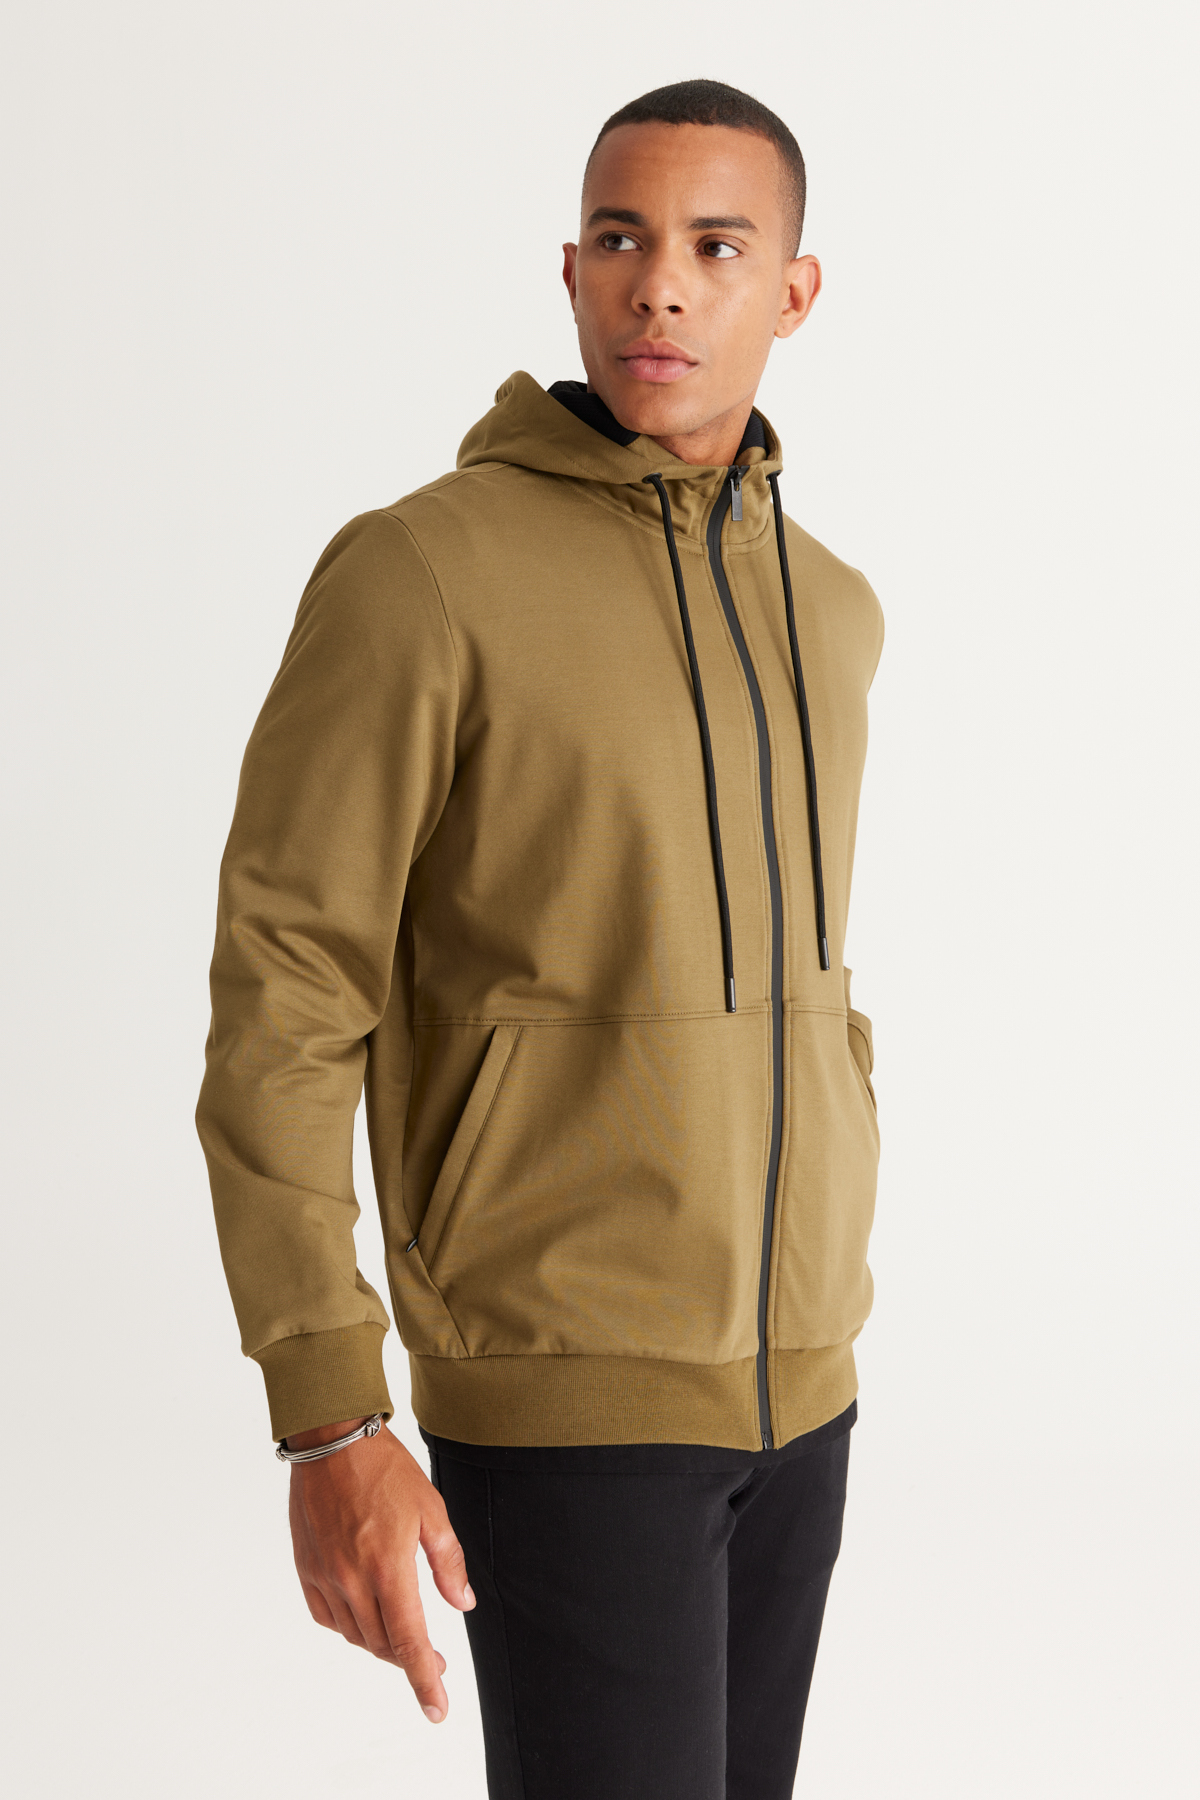 ALTINYILDIZ CLASSICS Men's Khaki Standard Fit Regular Fit Hooded Zipper Sweatshirt Jacket